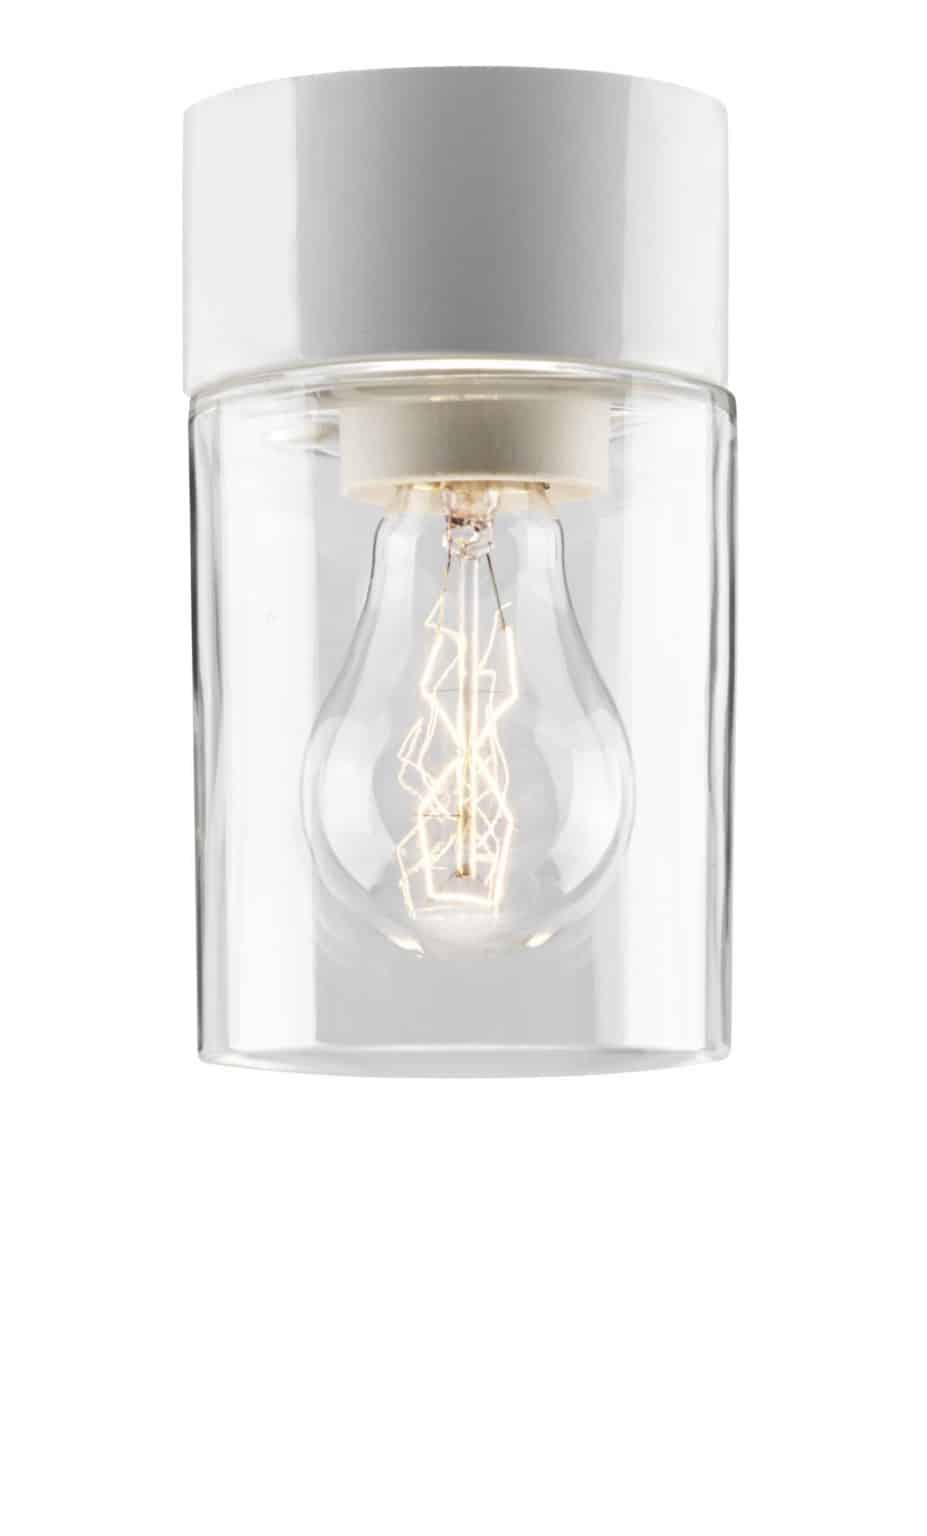 Buitenlamp Opus ifo electric wit opus 100/175 porselein tuinextra helder glas